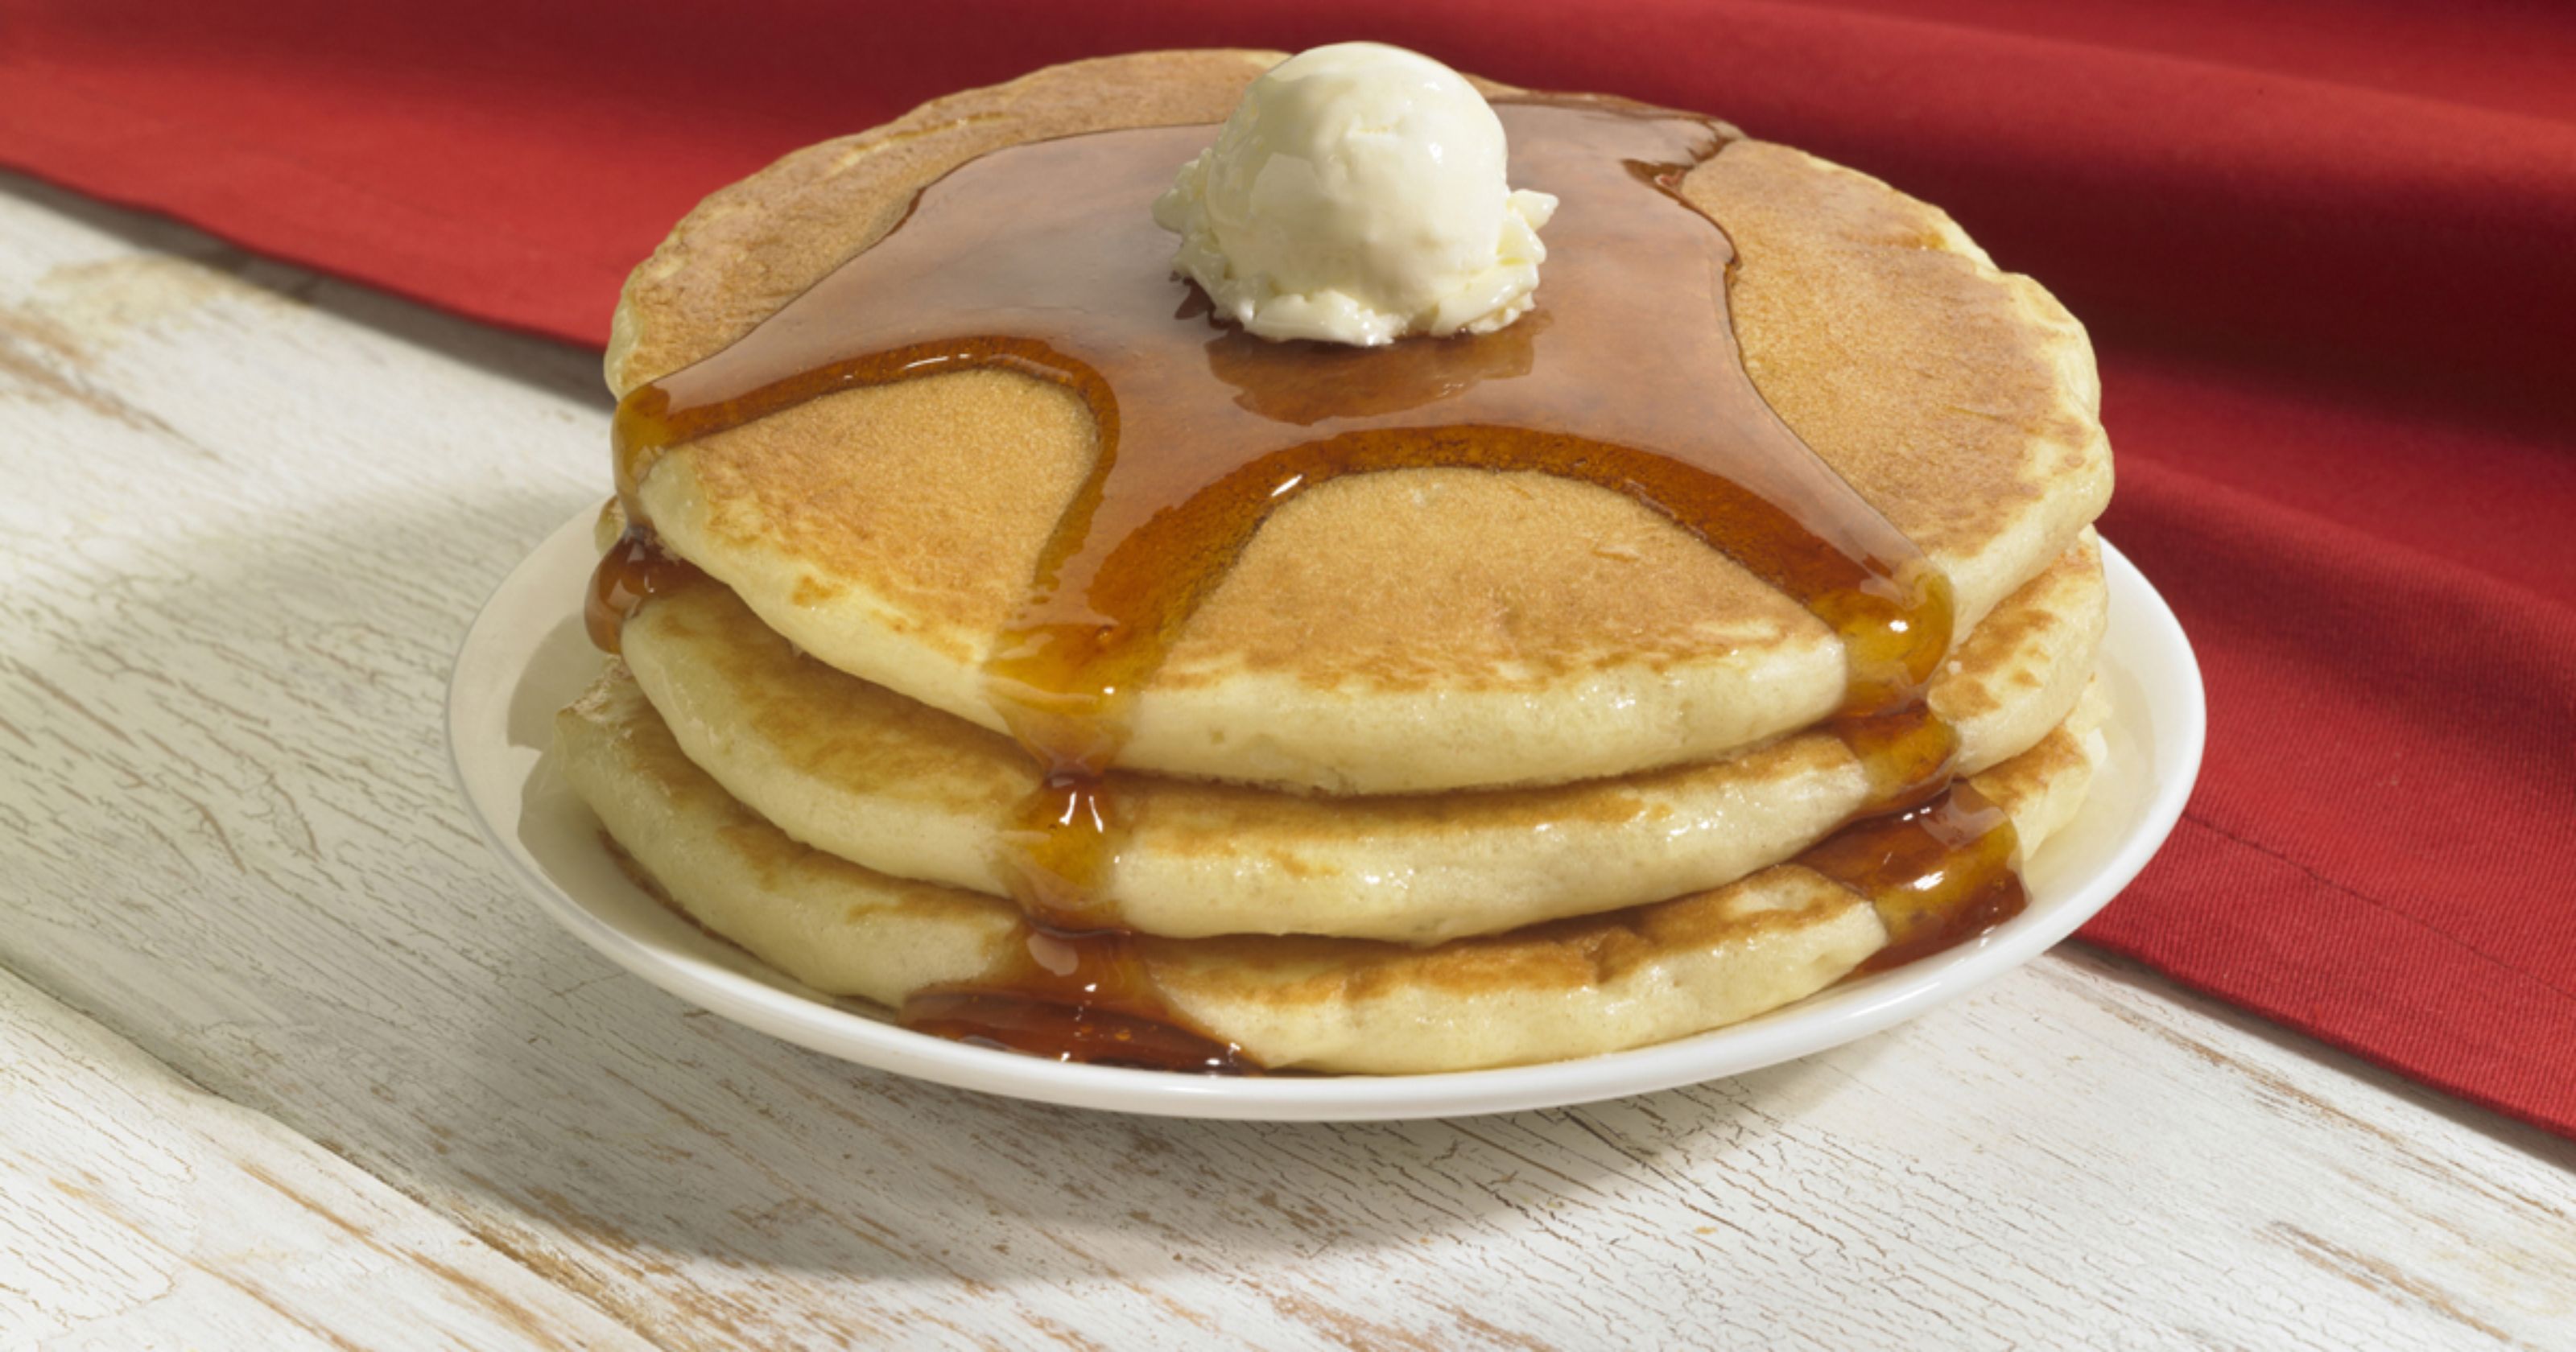 Free pancakes at IHOP for National Pancake Day on Feb. 27